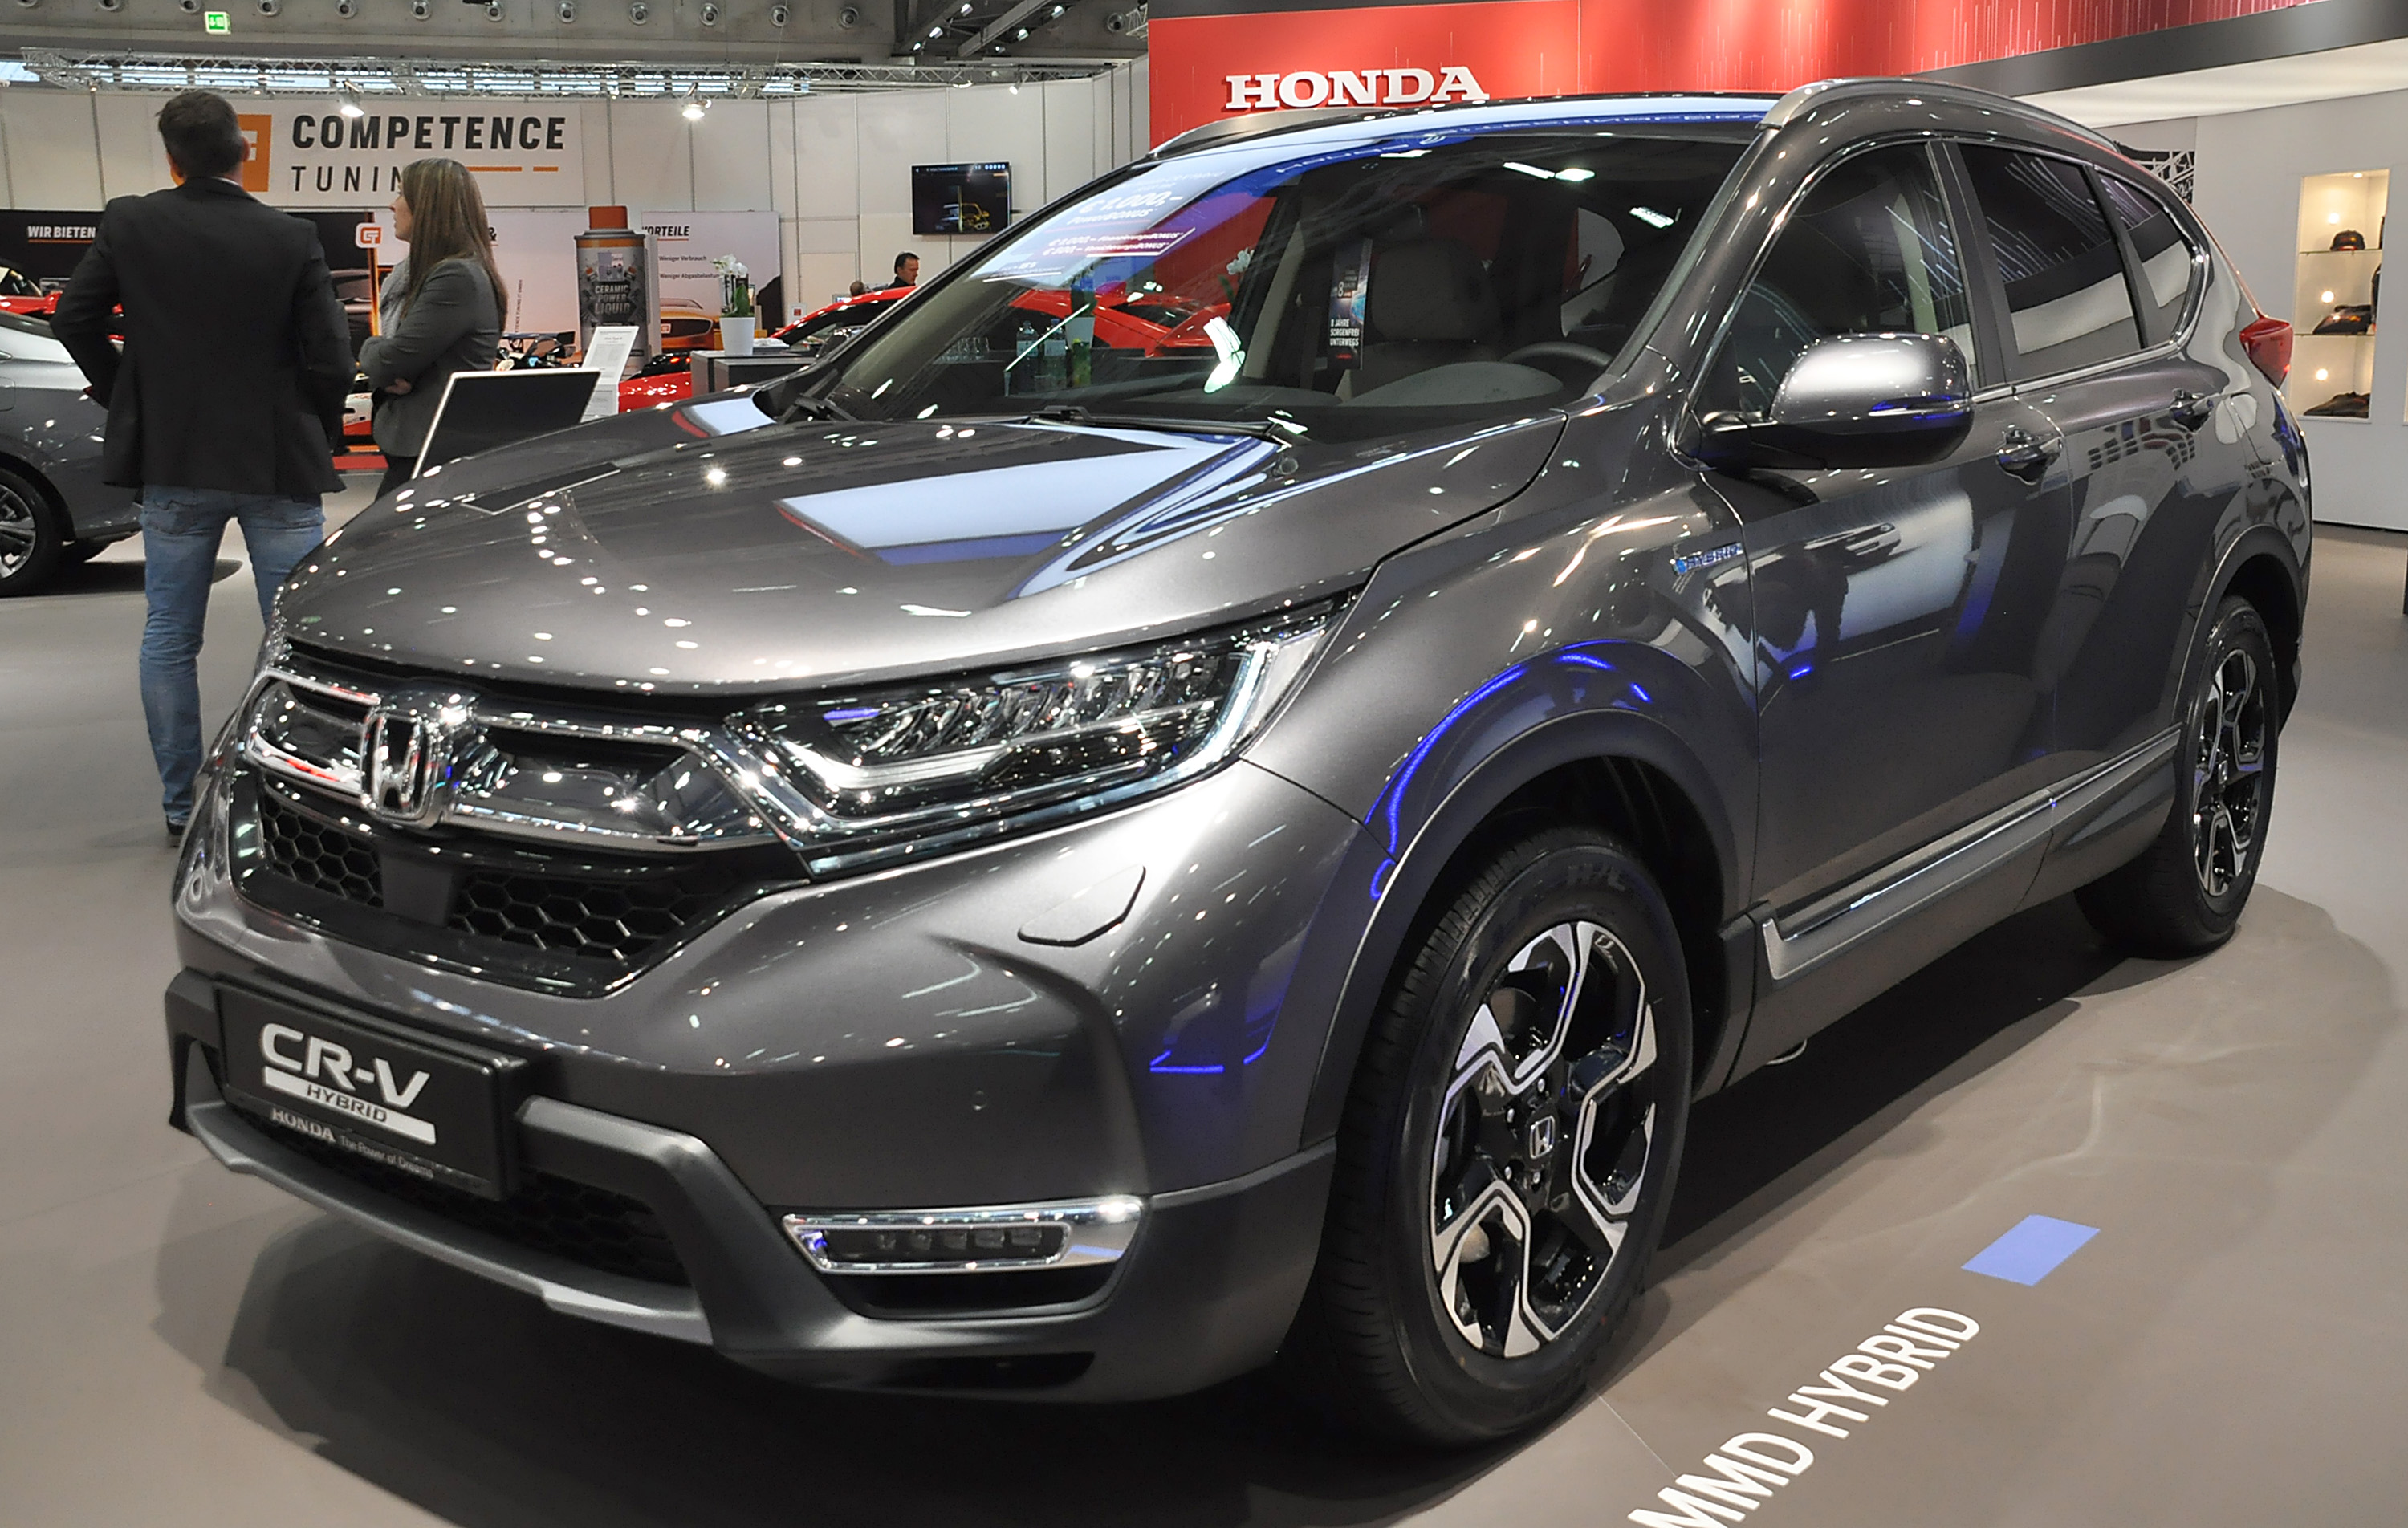 A gray Honda CR-V on display at an auto show